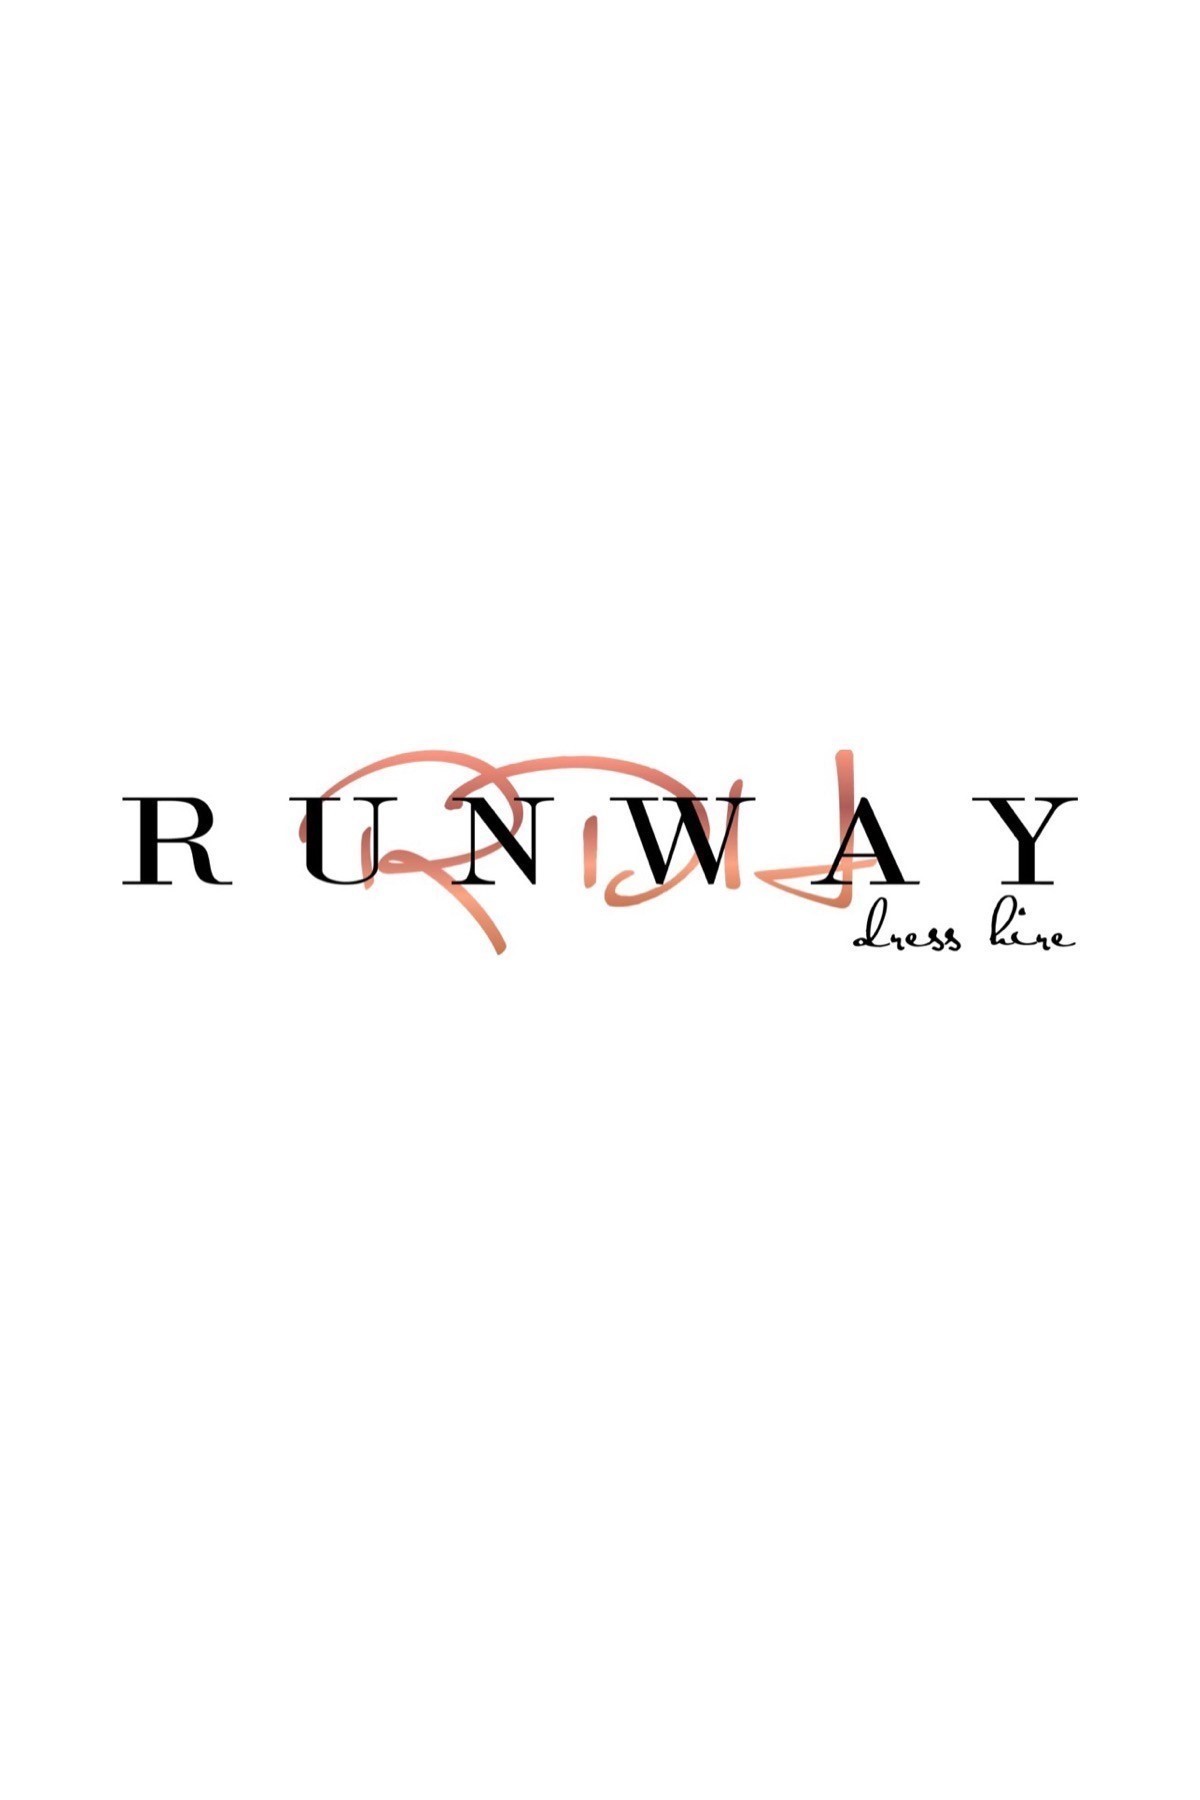 Runway Dress Hire Profile Image